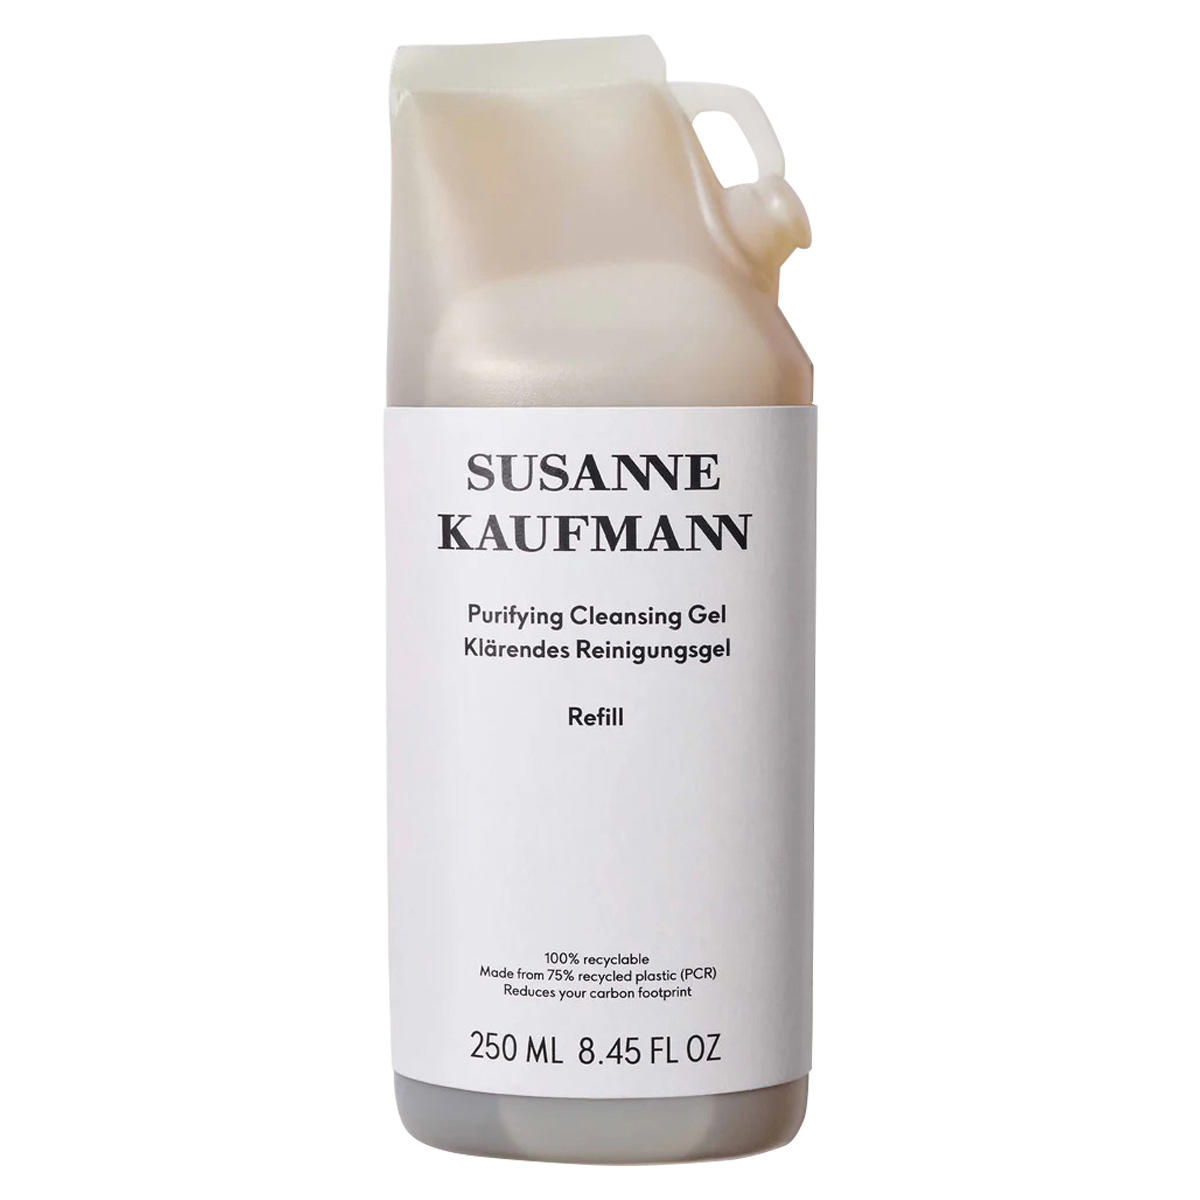 Susanne Kaufmann Purifying Cleansing Gel Refill 250 ml - 1